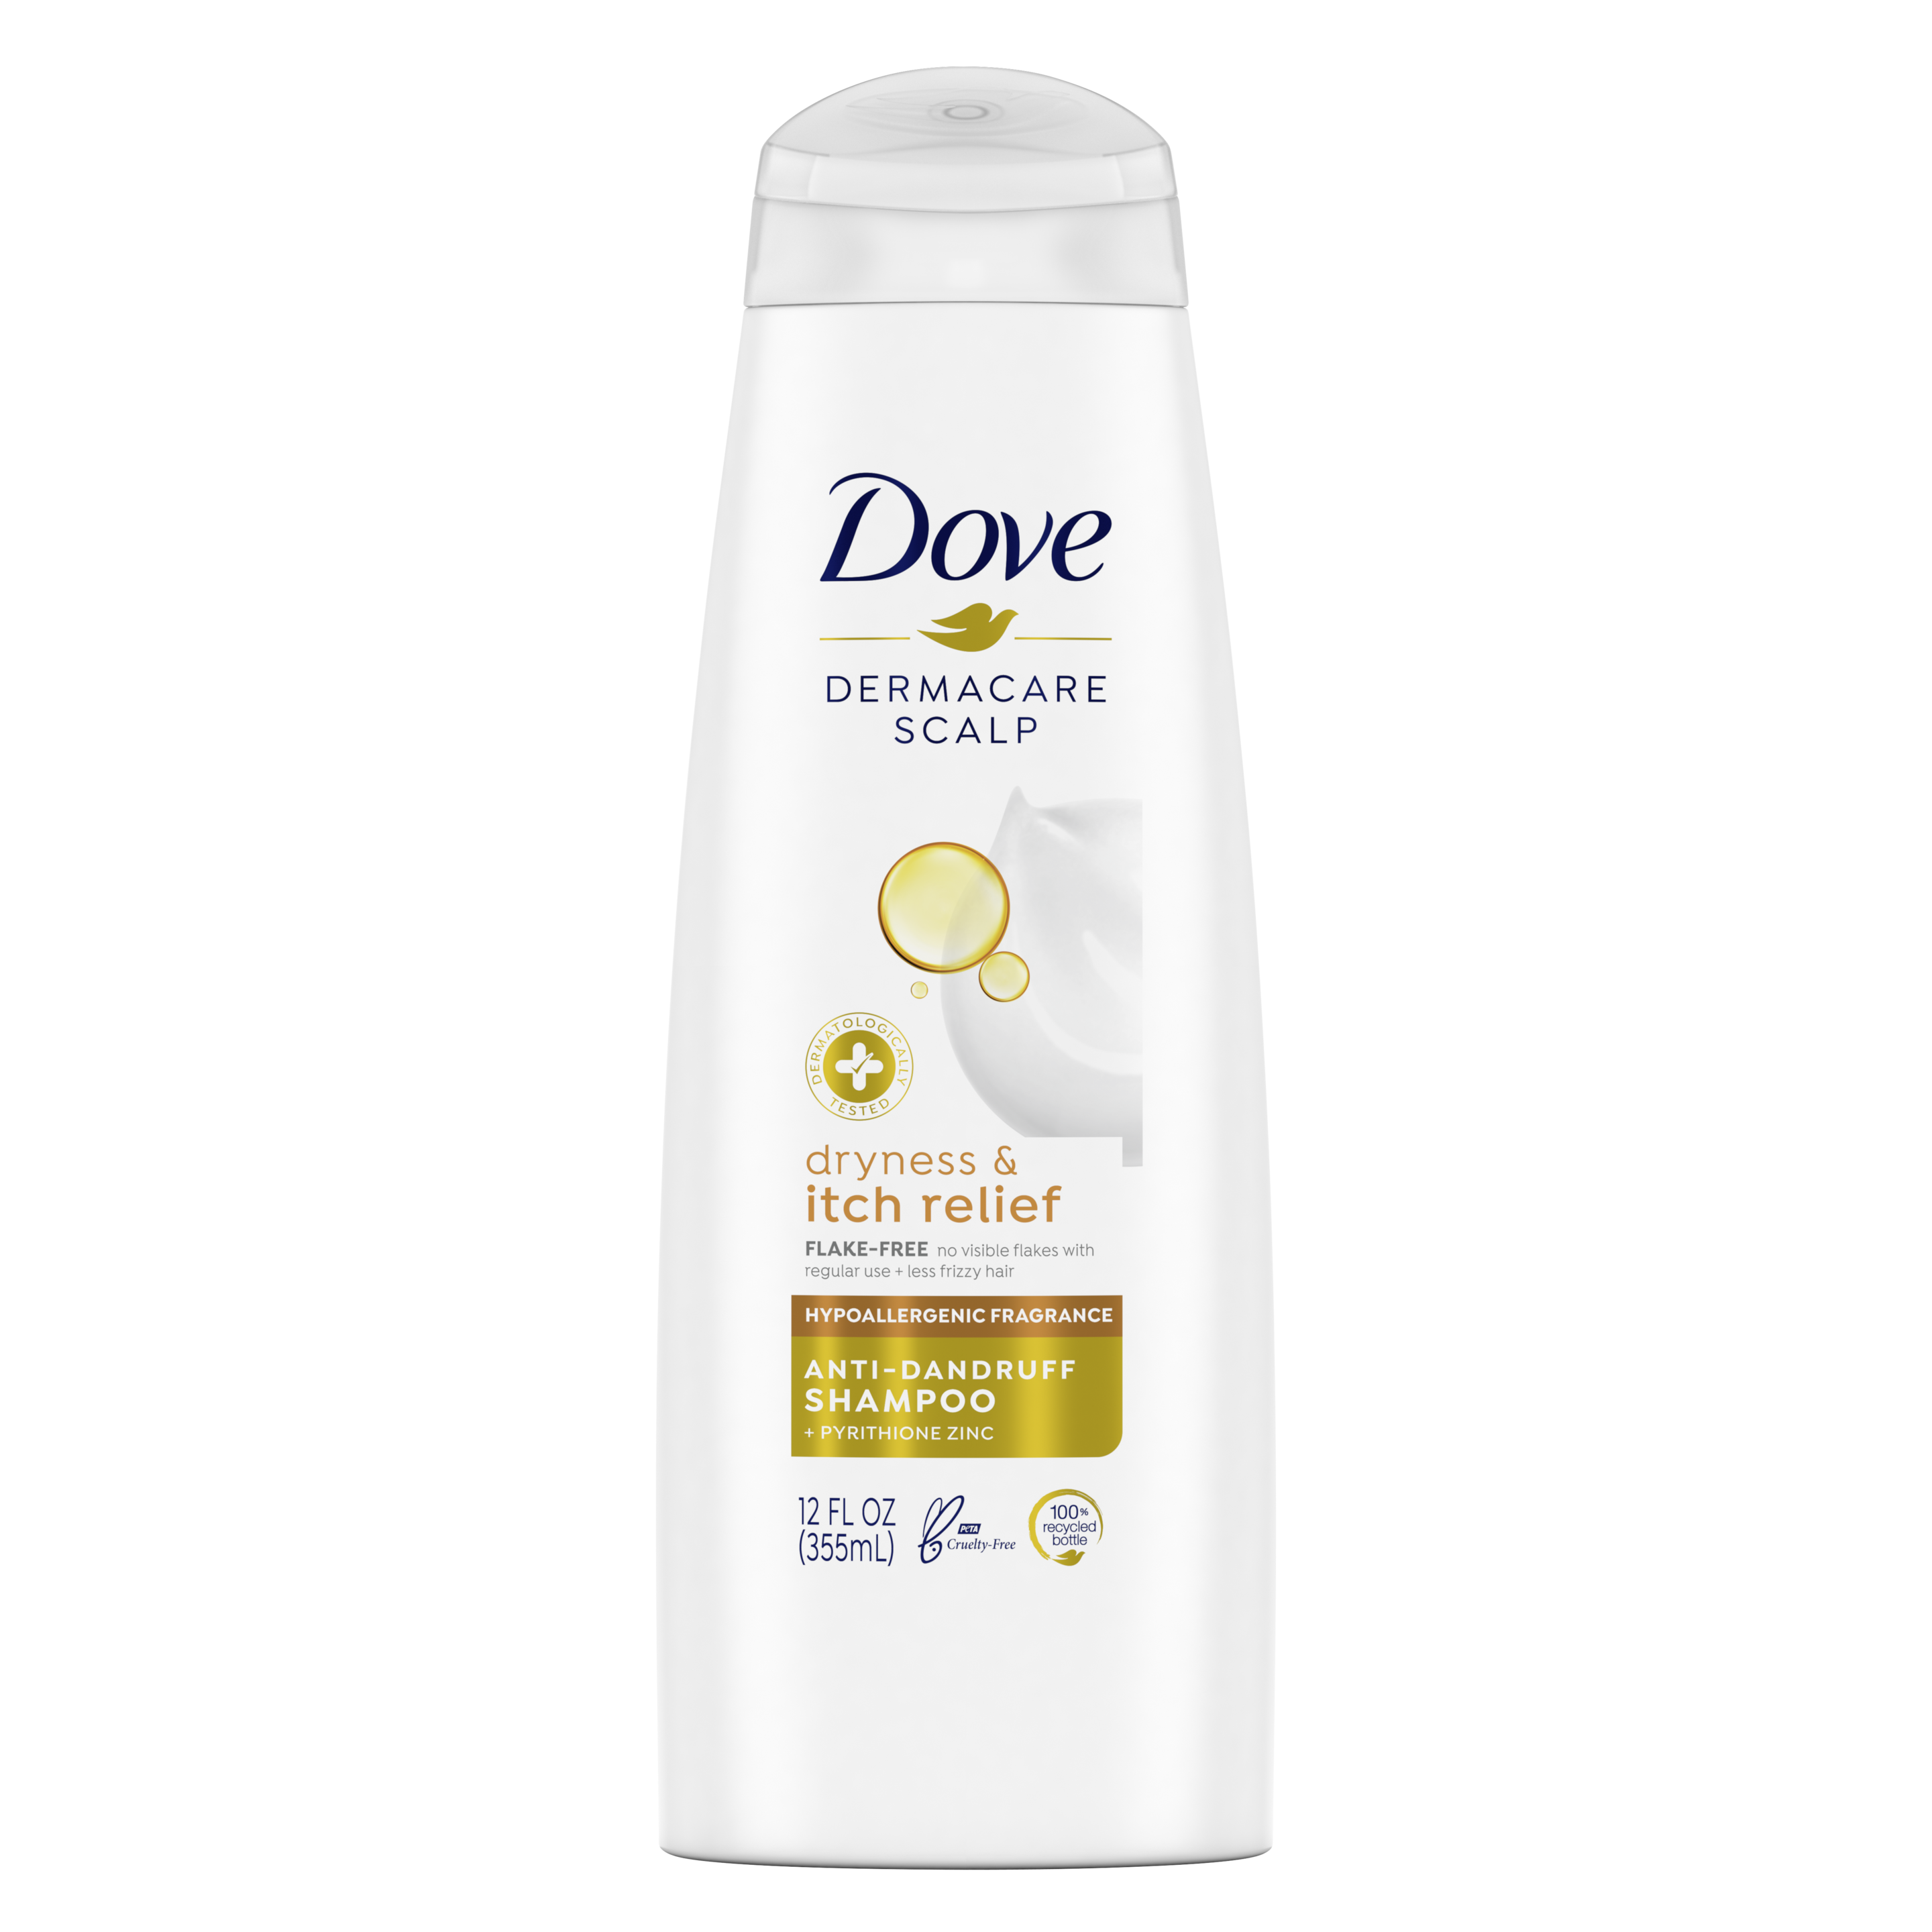 Dove Dermacare Scalp Dryness & Itch Relief Shampoo 12 oz